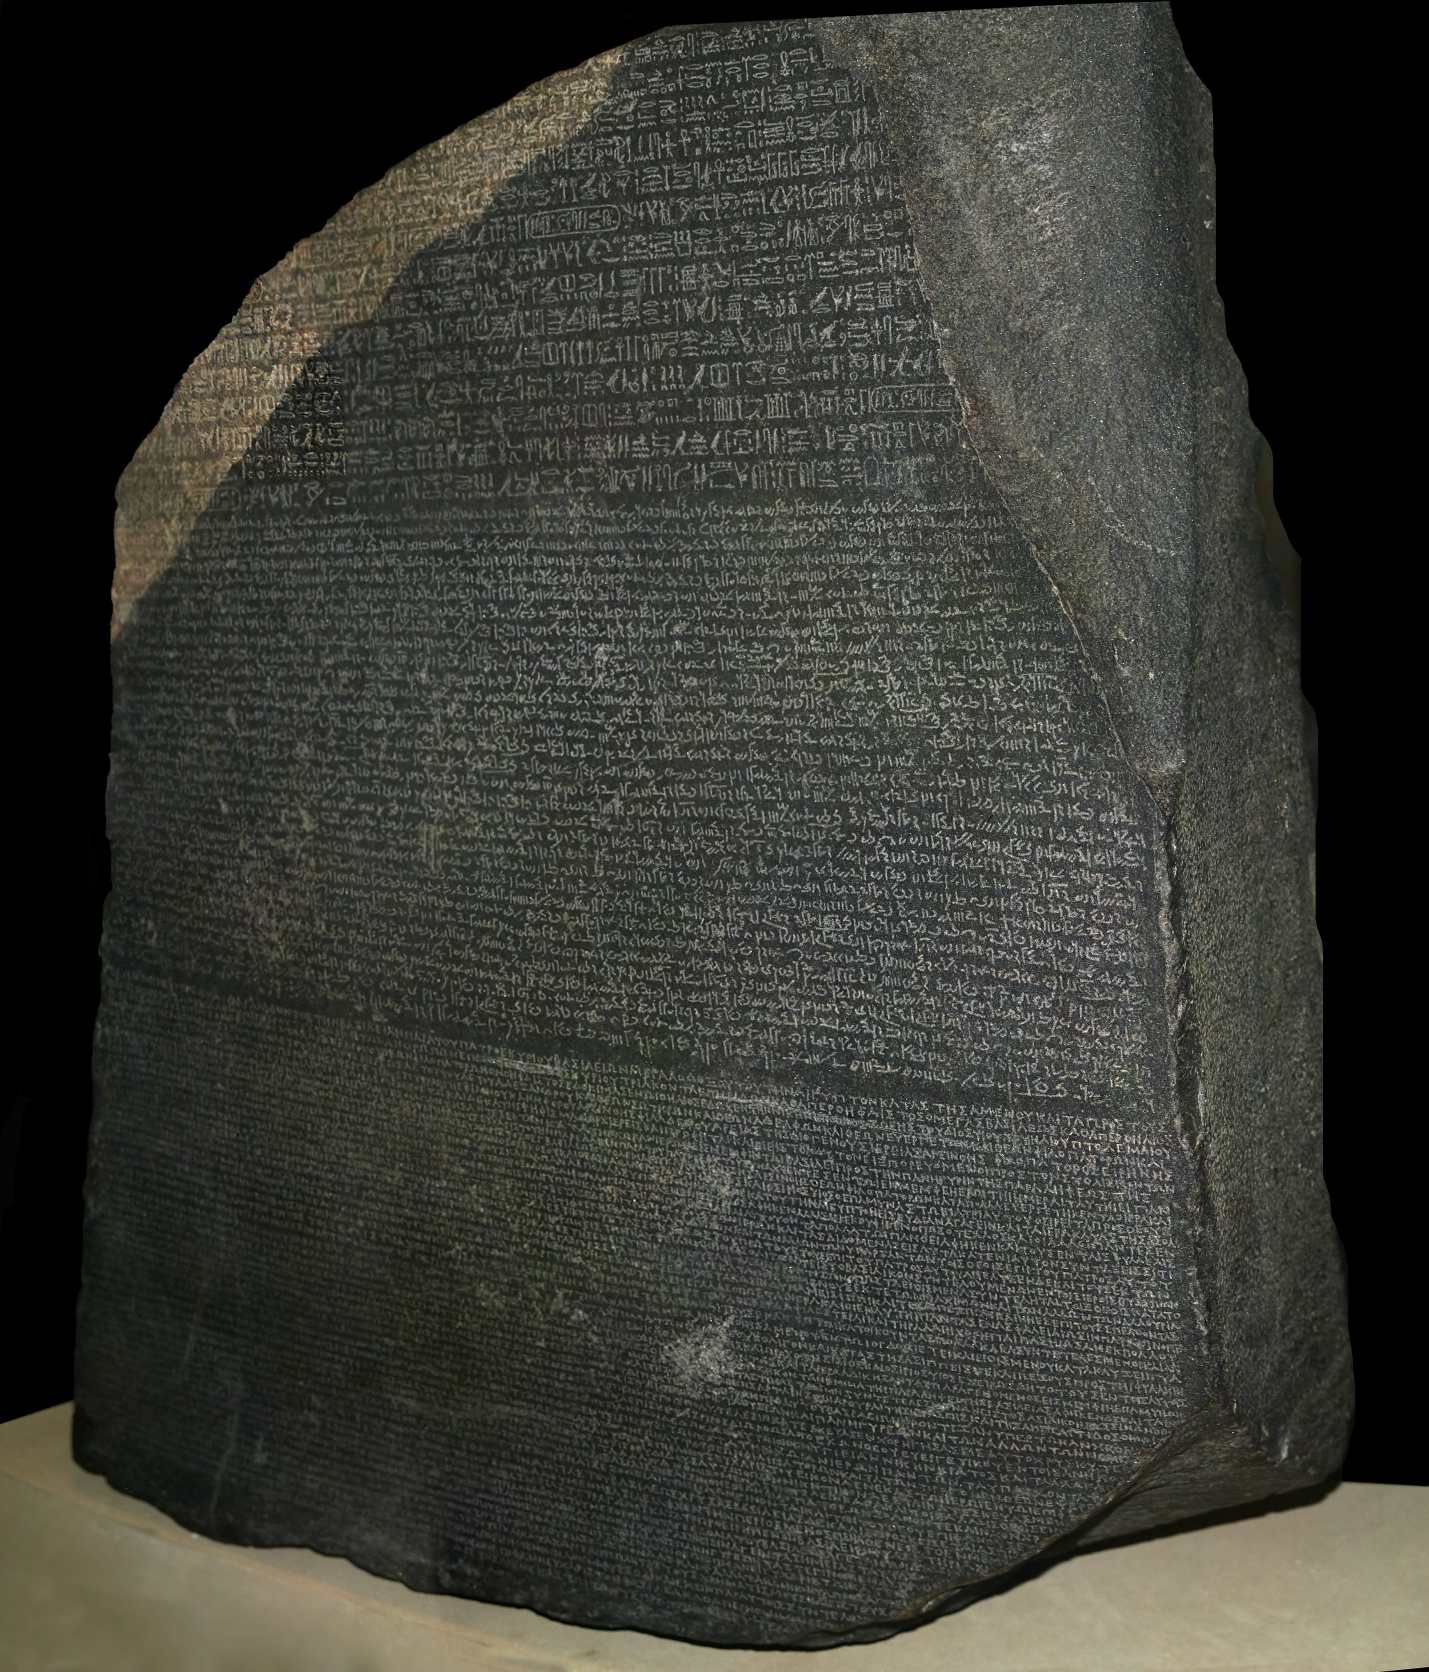 The Rosetta Stone in the British Museum, London